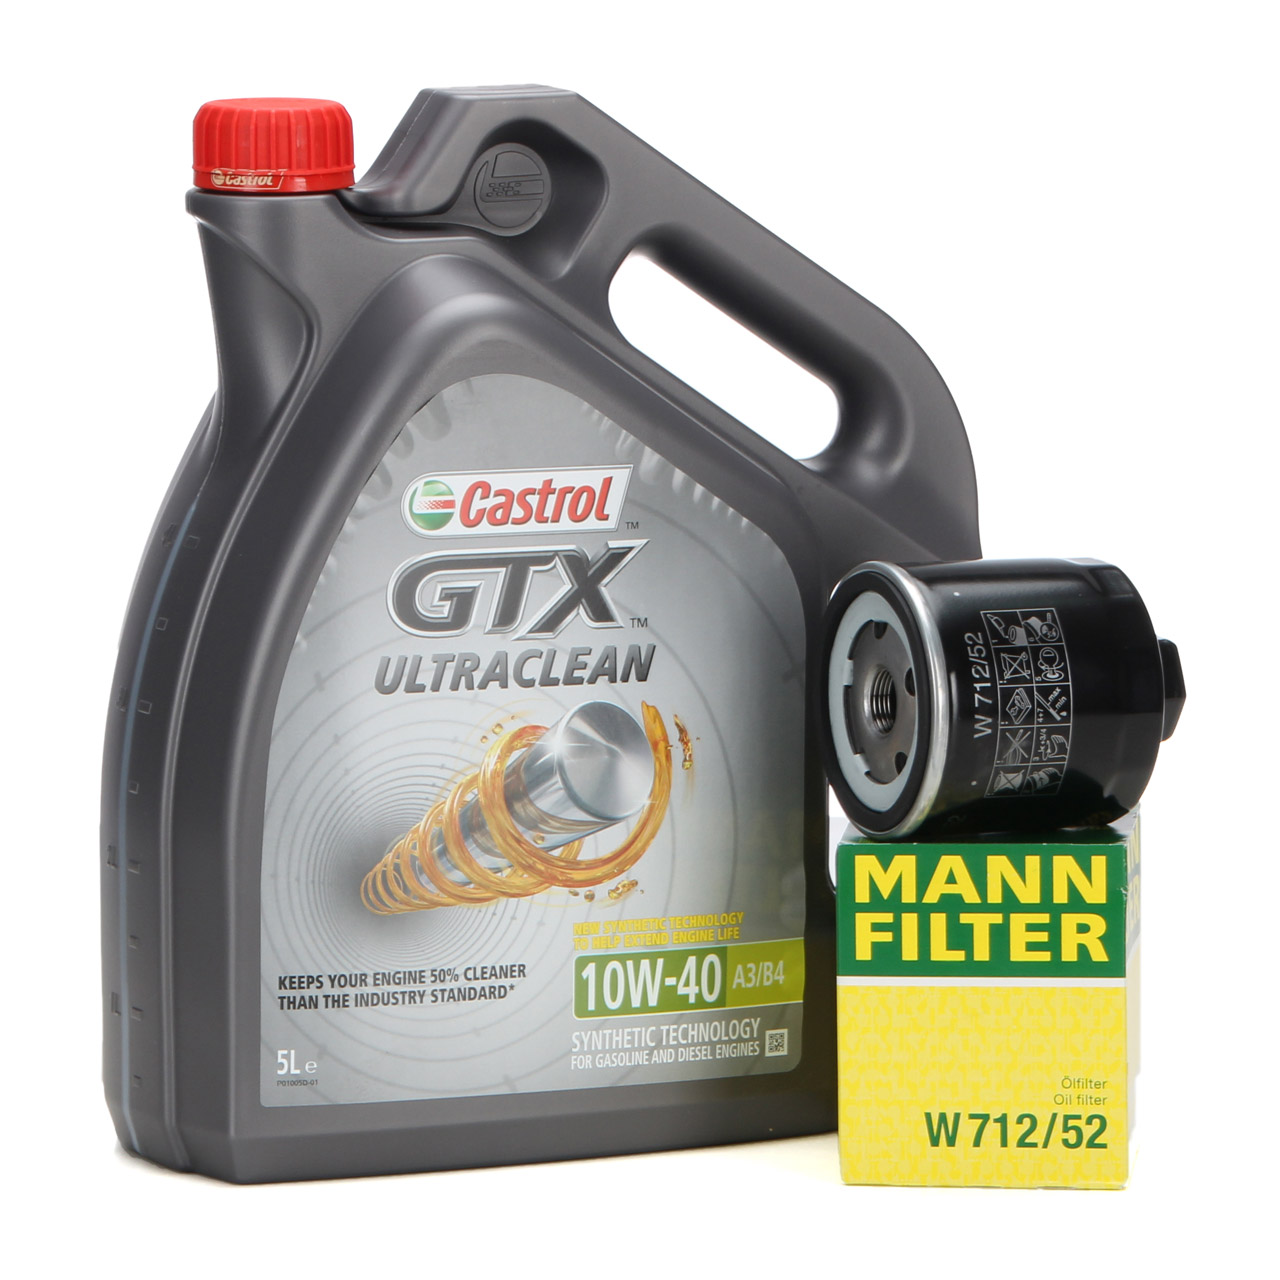 5 Liter CASTROL Motoröl Öl GTX ULTRACLEAN 10W40 A3/B4 + MANN W712/52 Ölfilter